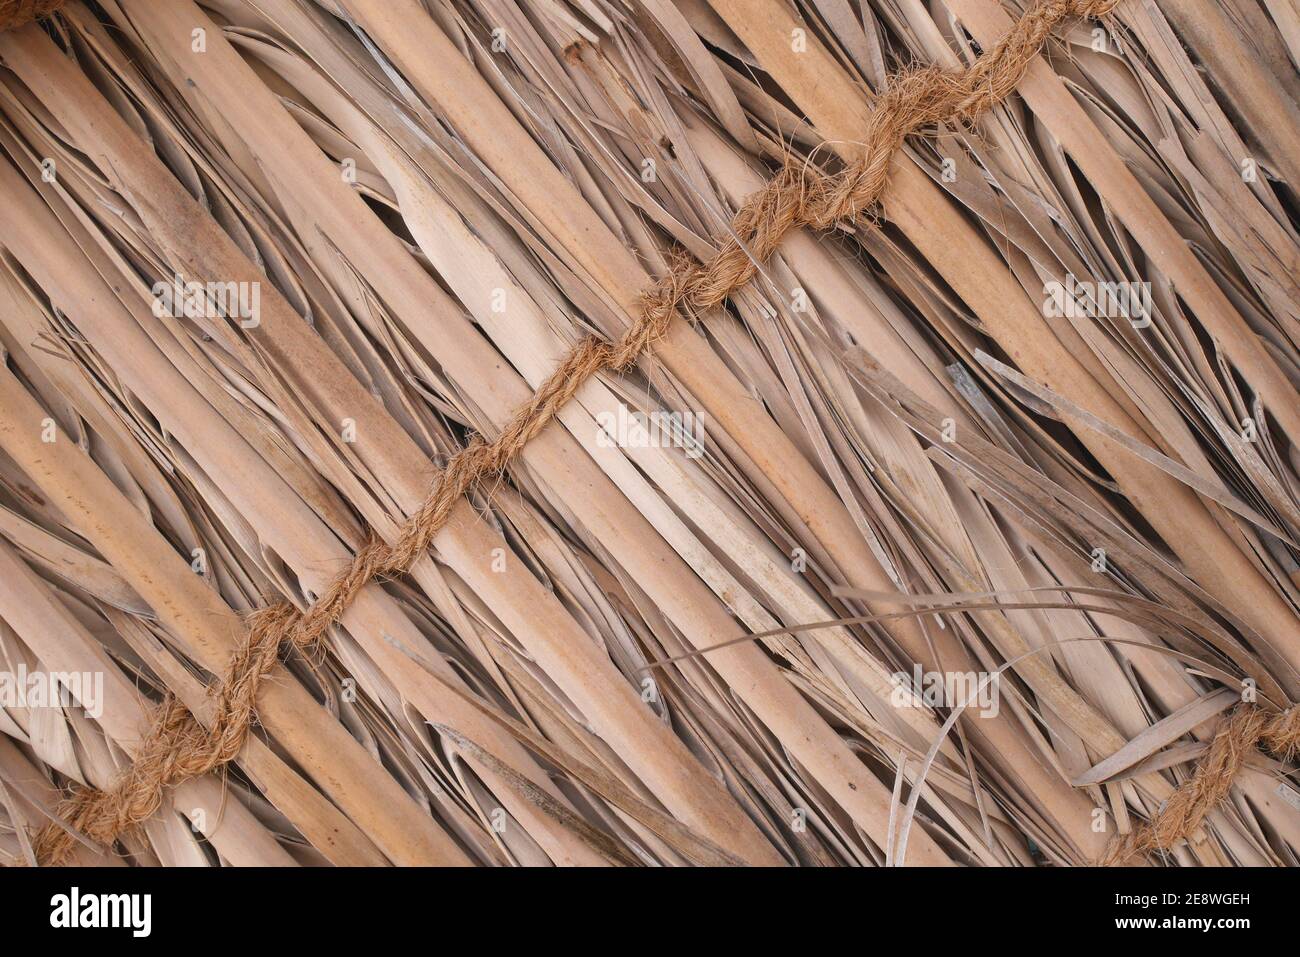 Outside wall made of palm fronds, Bani Jamra weaving textiles factory, Bani Jamra, Kingdom of Bahrain Stock Photo